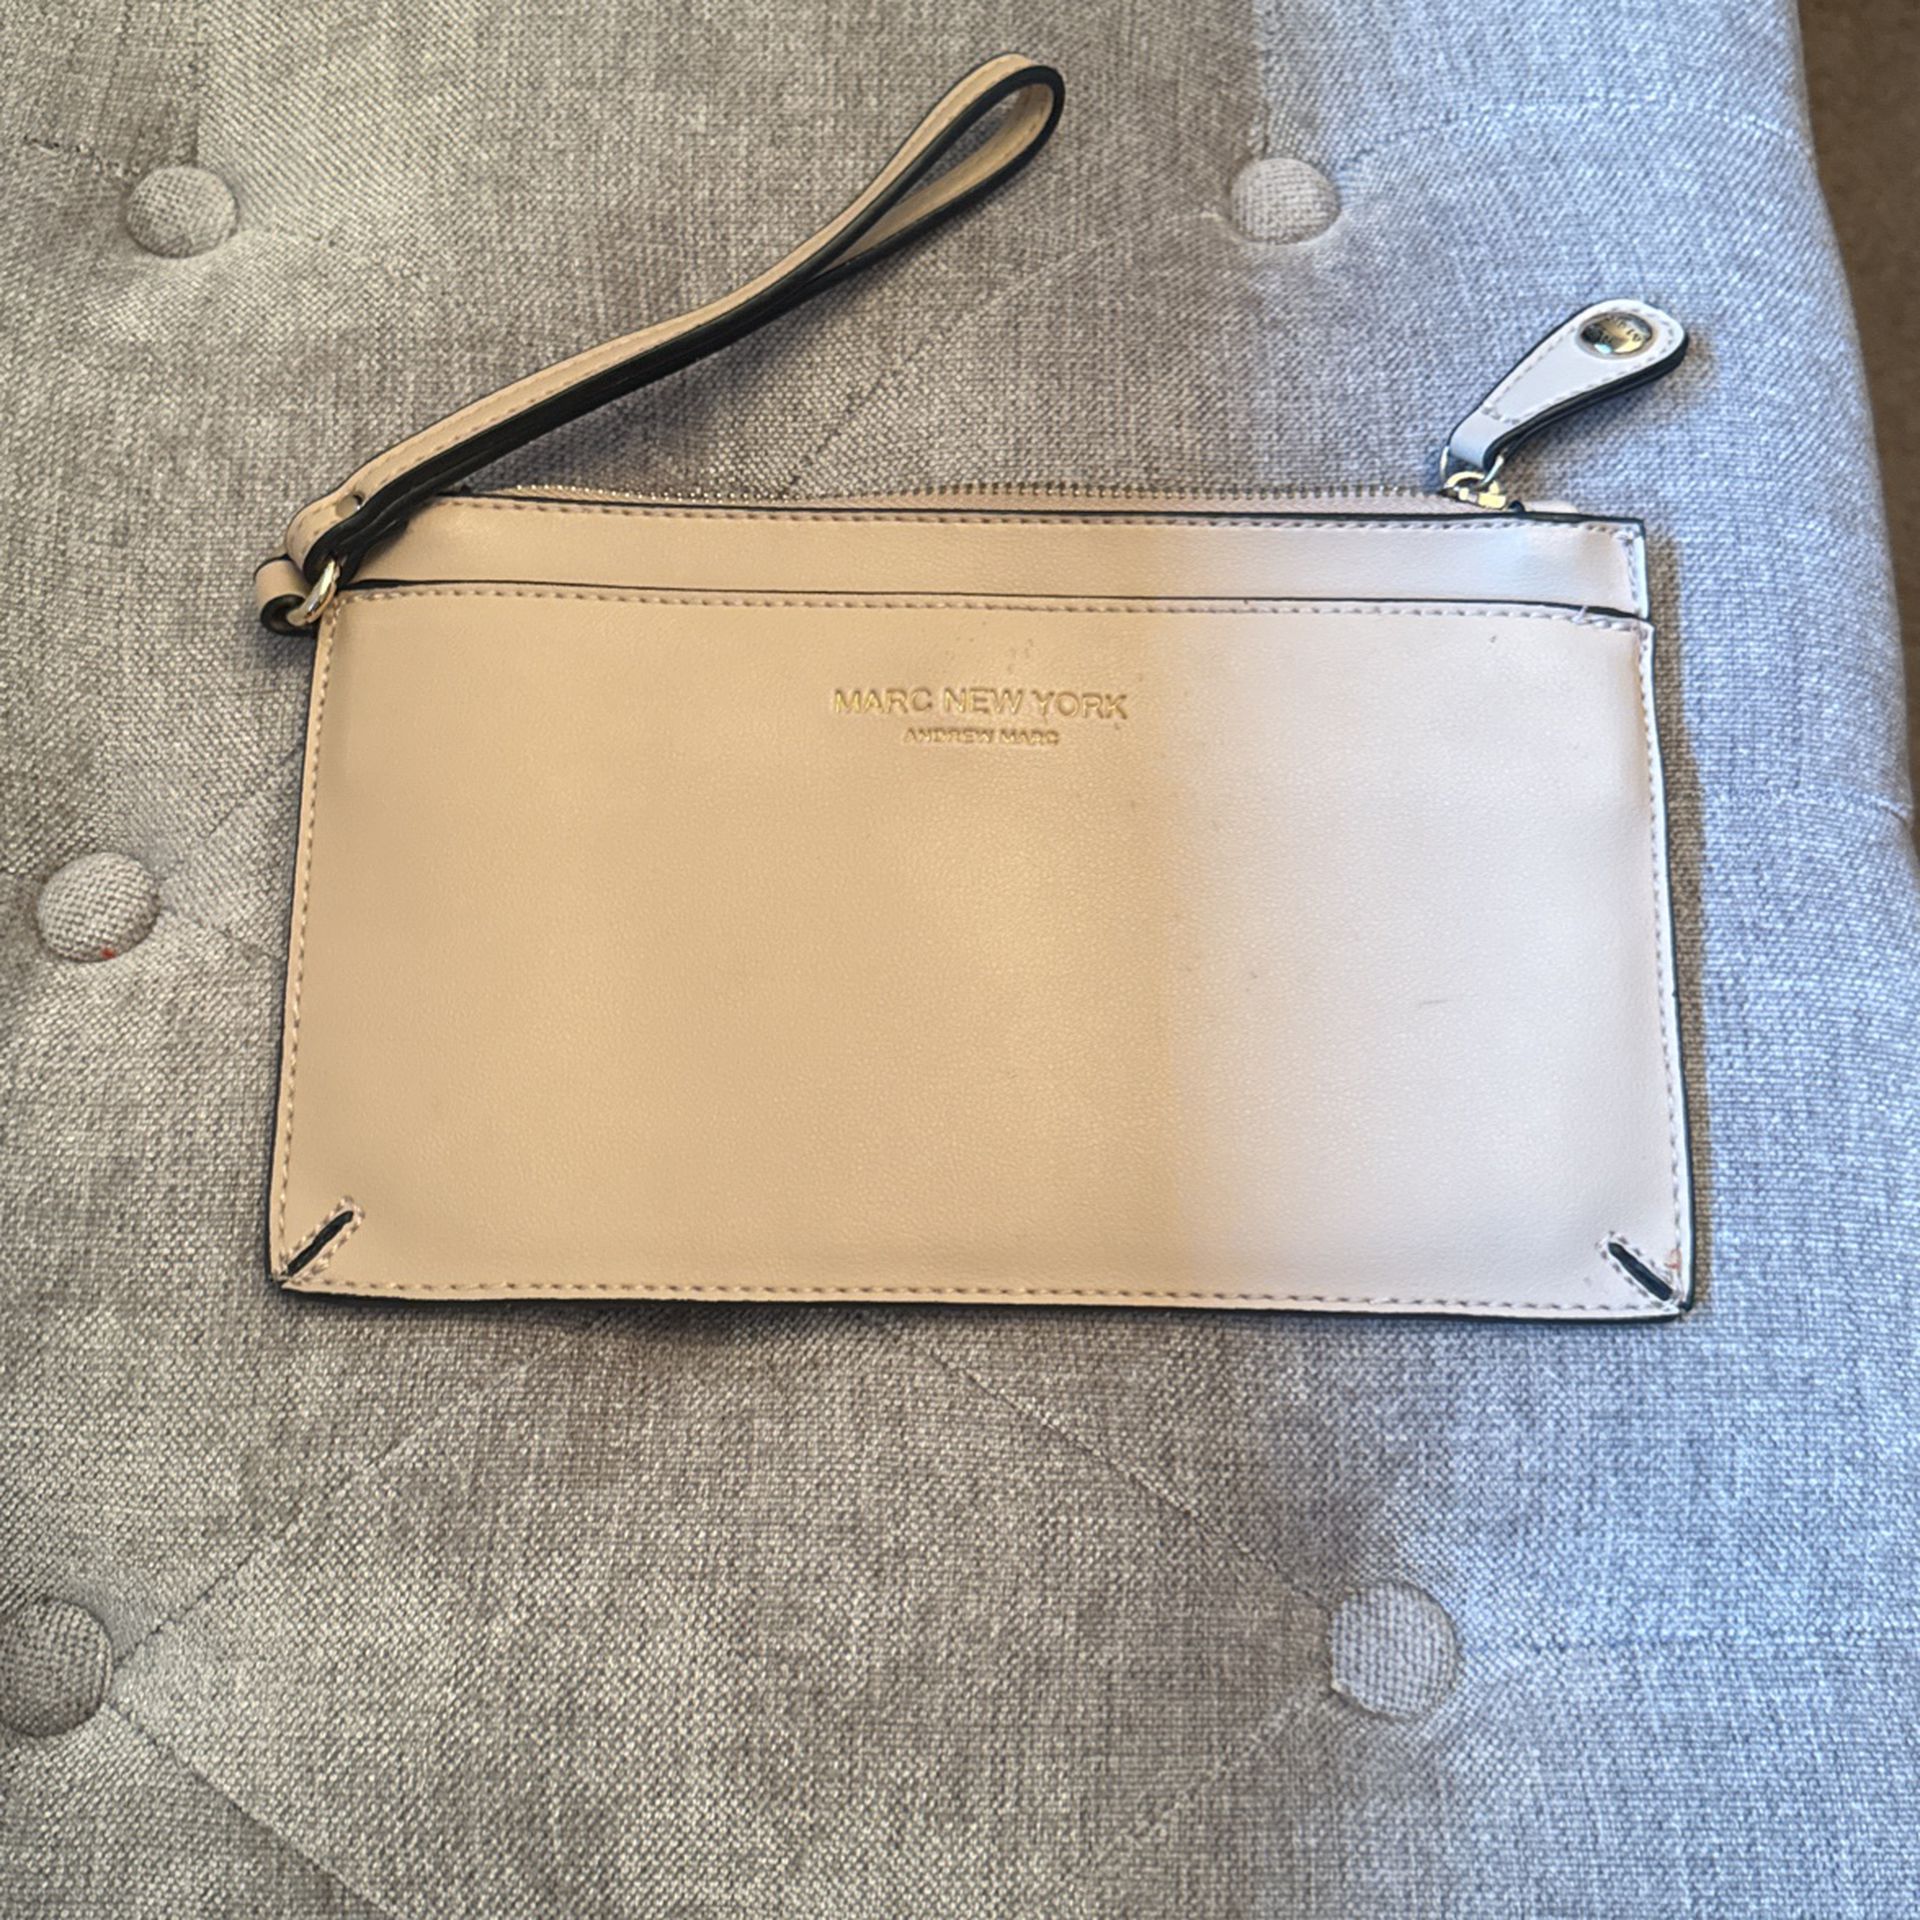 MARC NEW YORK Clutch Purse Wallet Small Handbag Beige